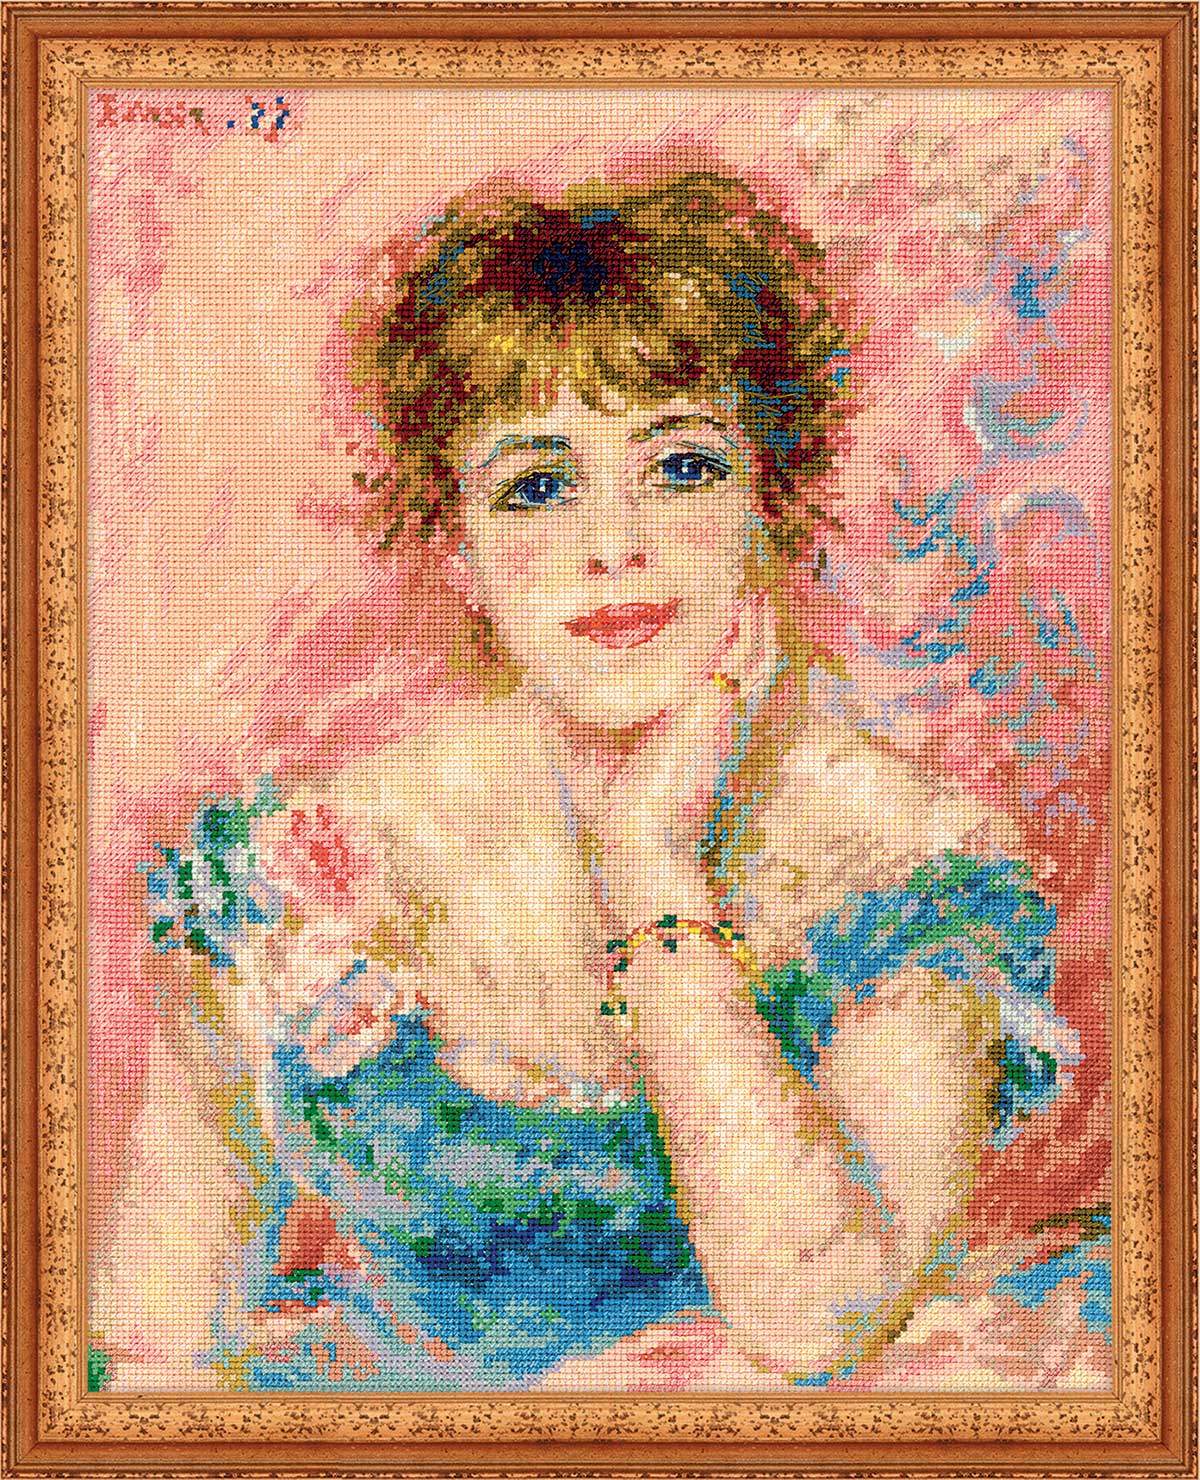 Renoir: Jeanne Samary portréja